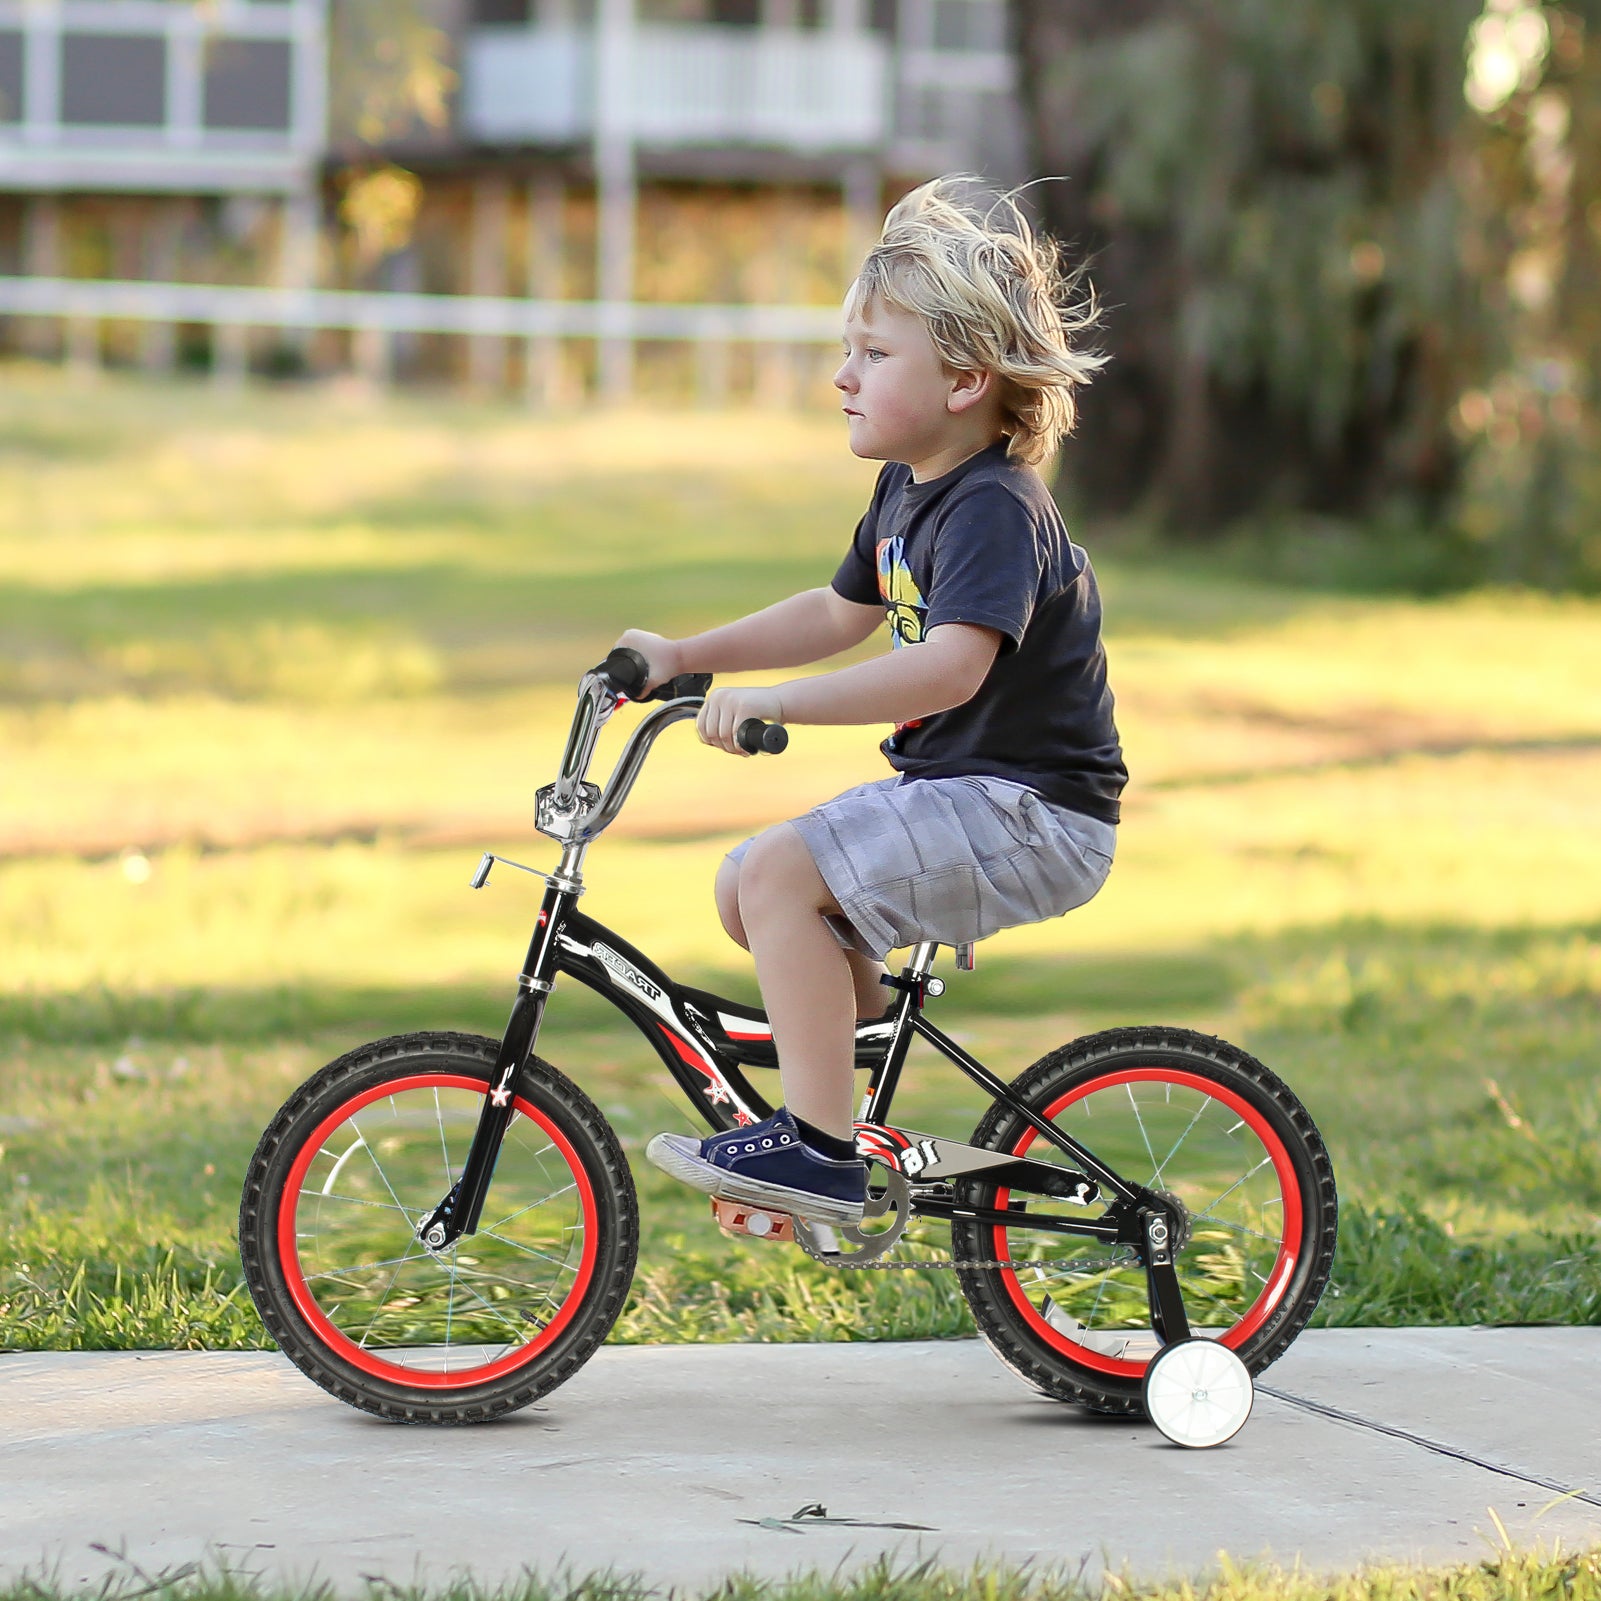 Tracer Rocky 16-inch Kids Bike with Training Wheels.